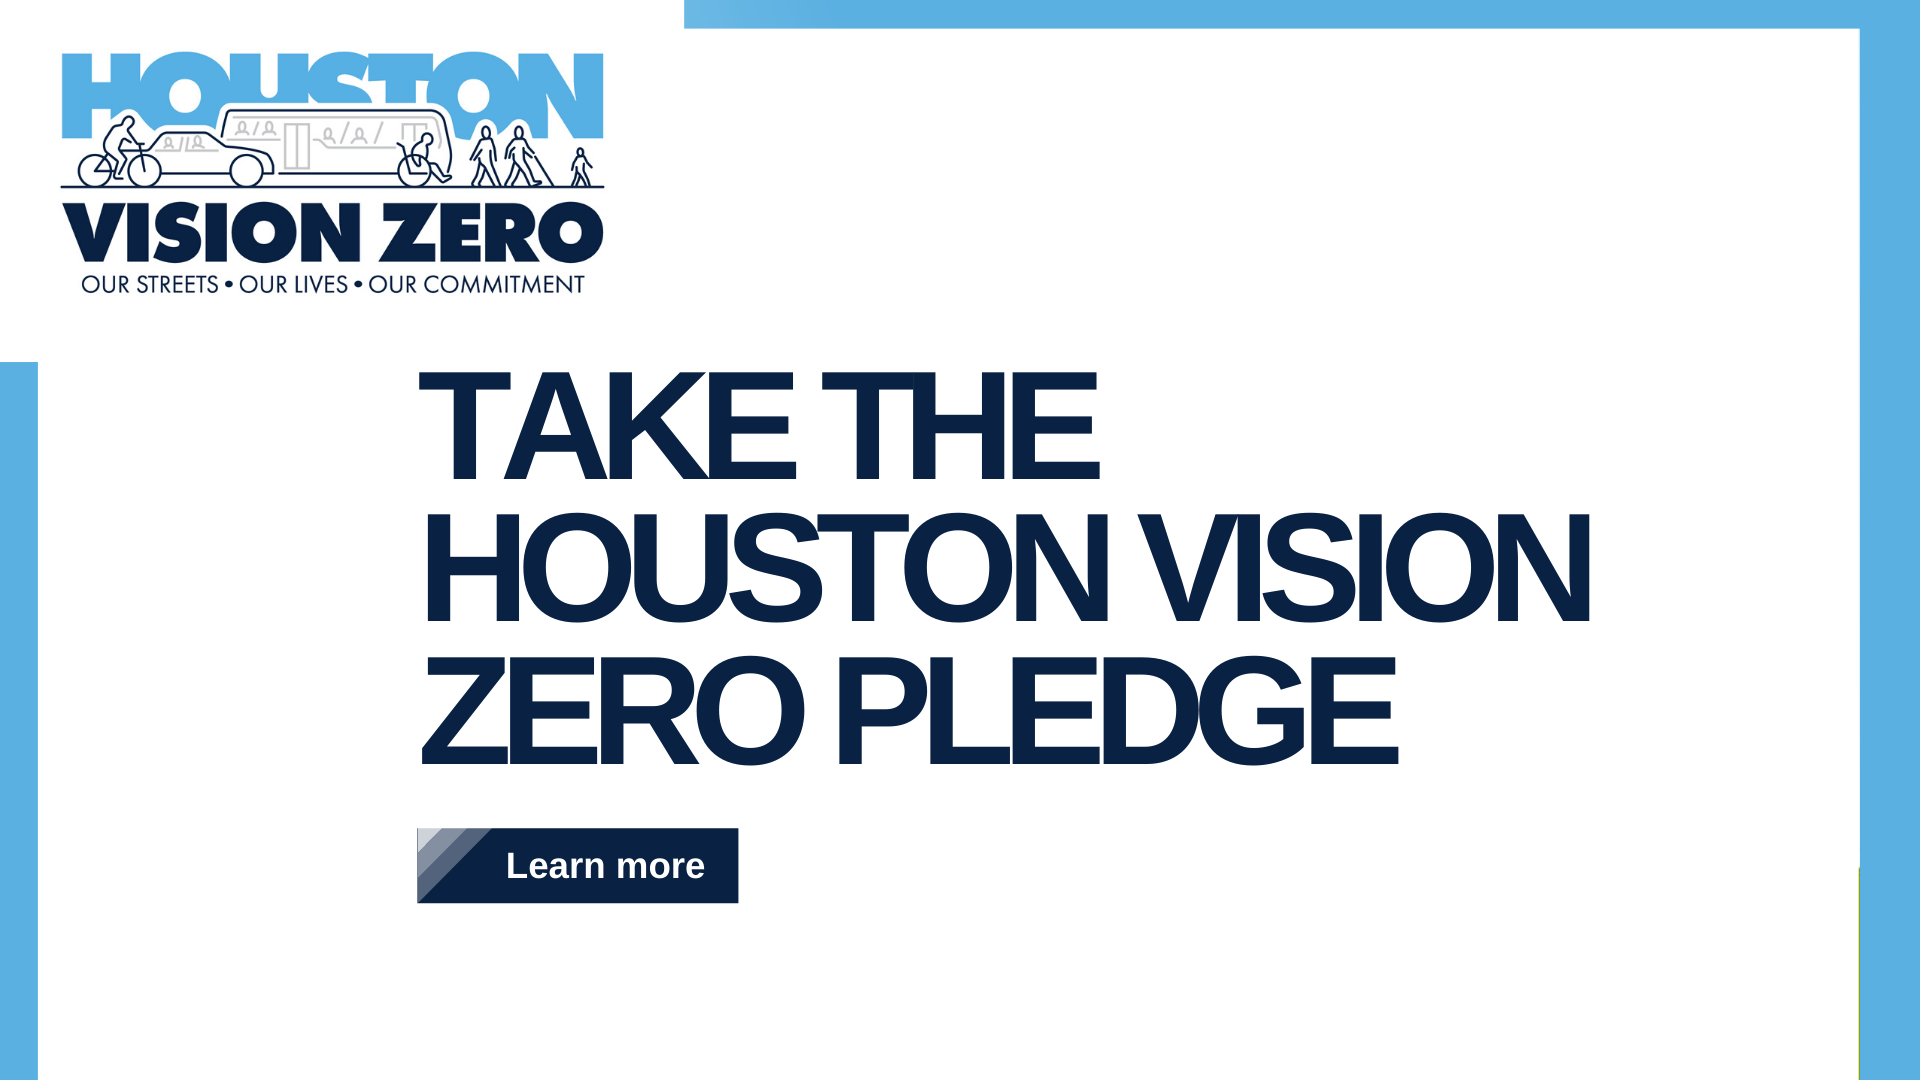 vision zero pledge